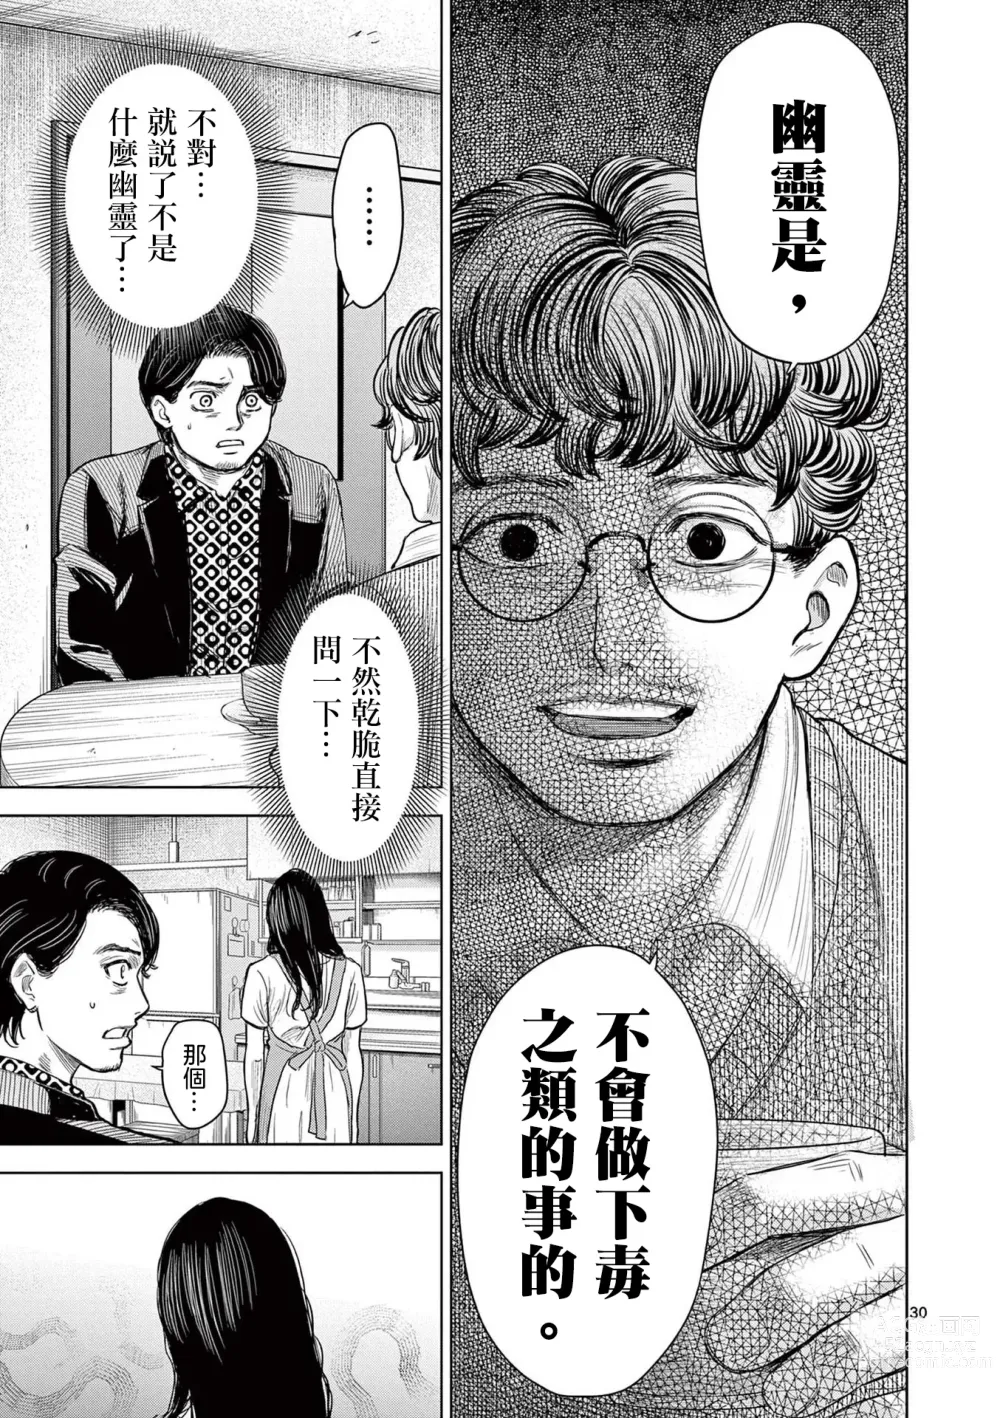 Page 36 of manga Iyadan Yobanashi Chinese]